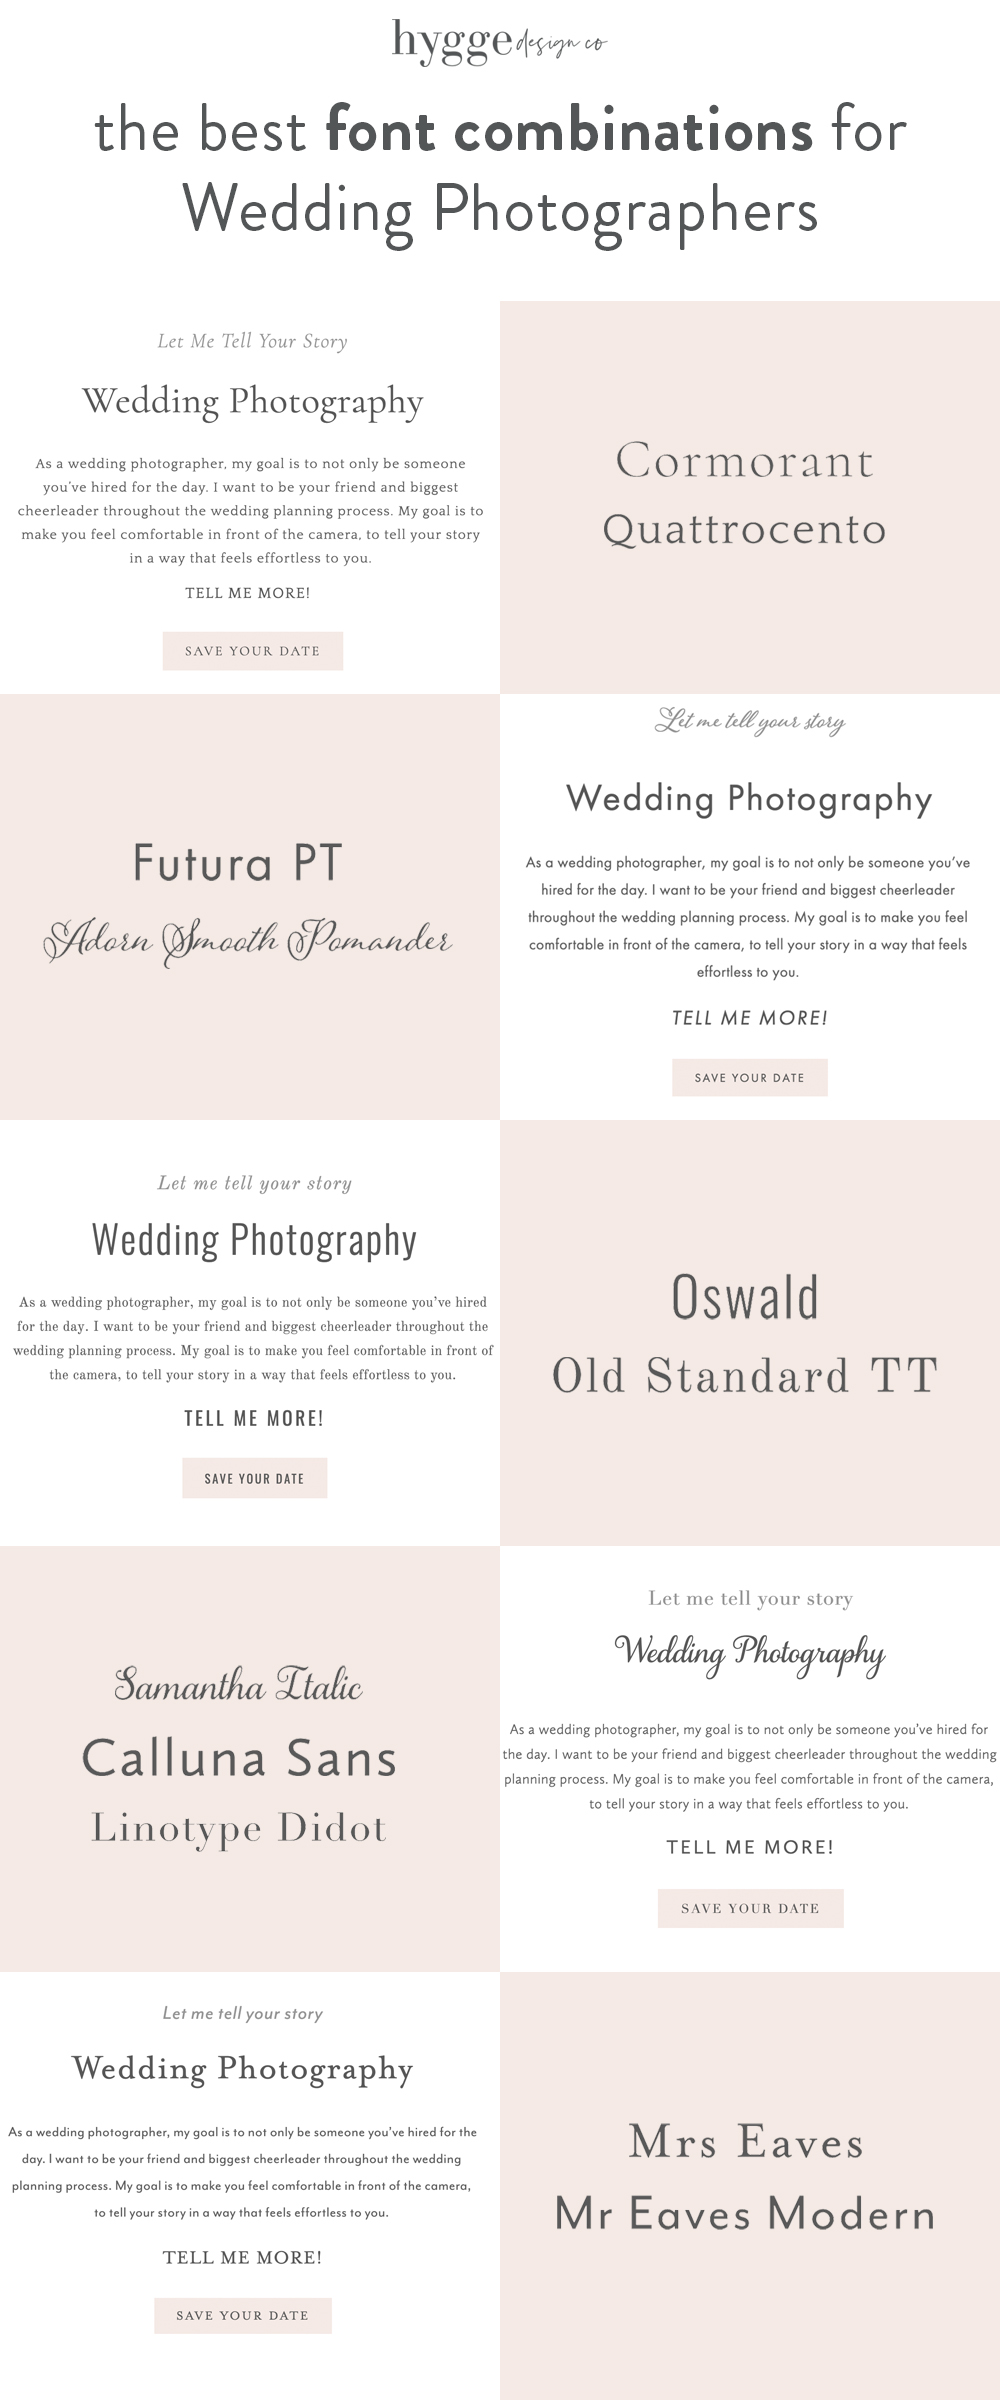 Wedding photographer website font options